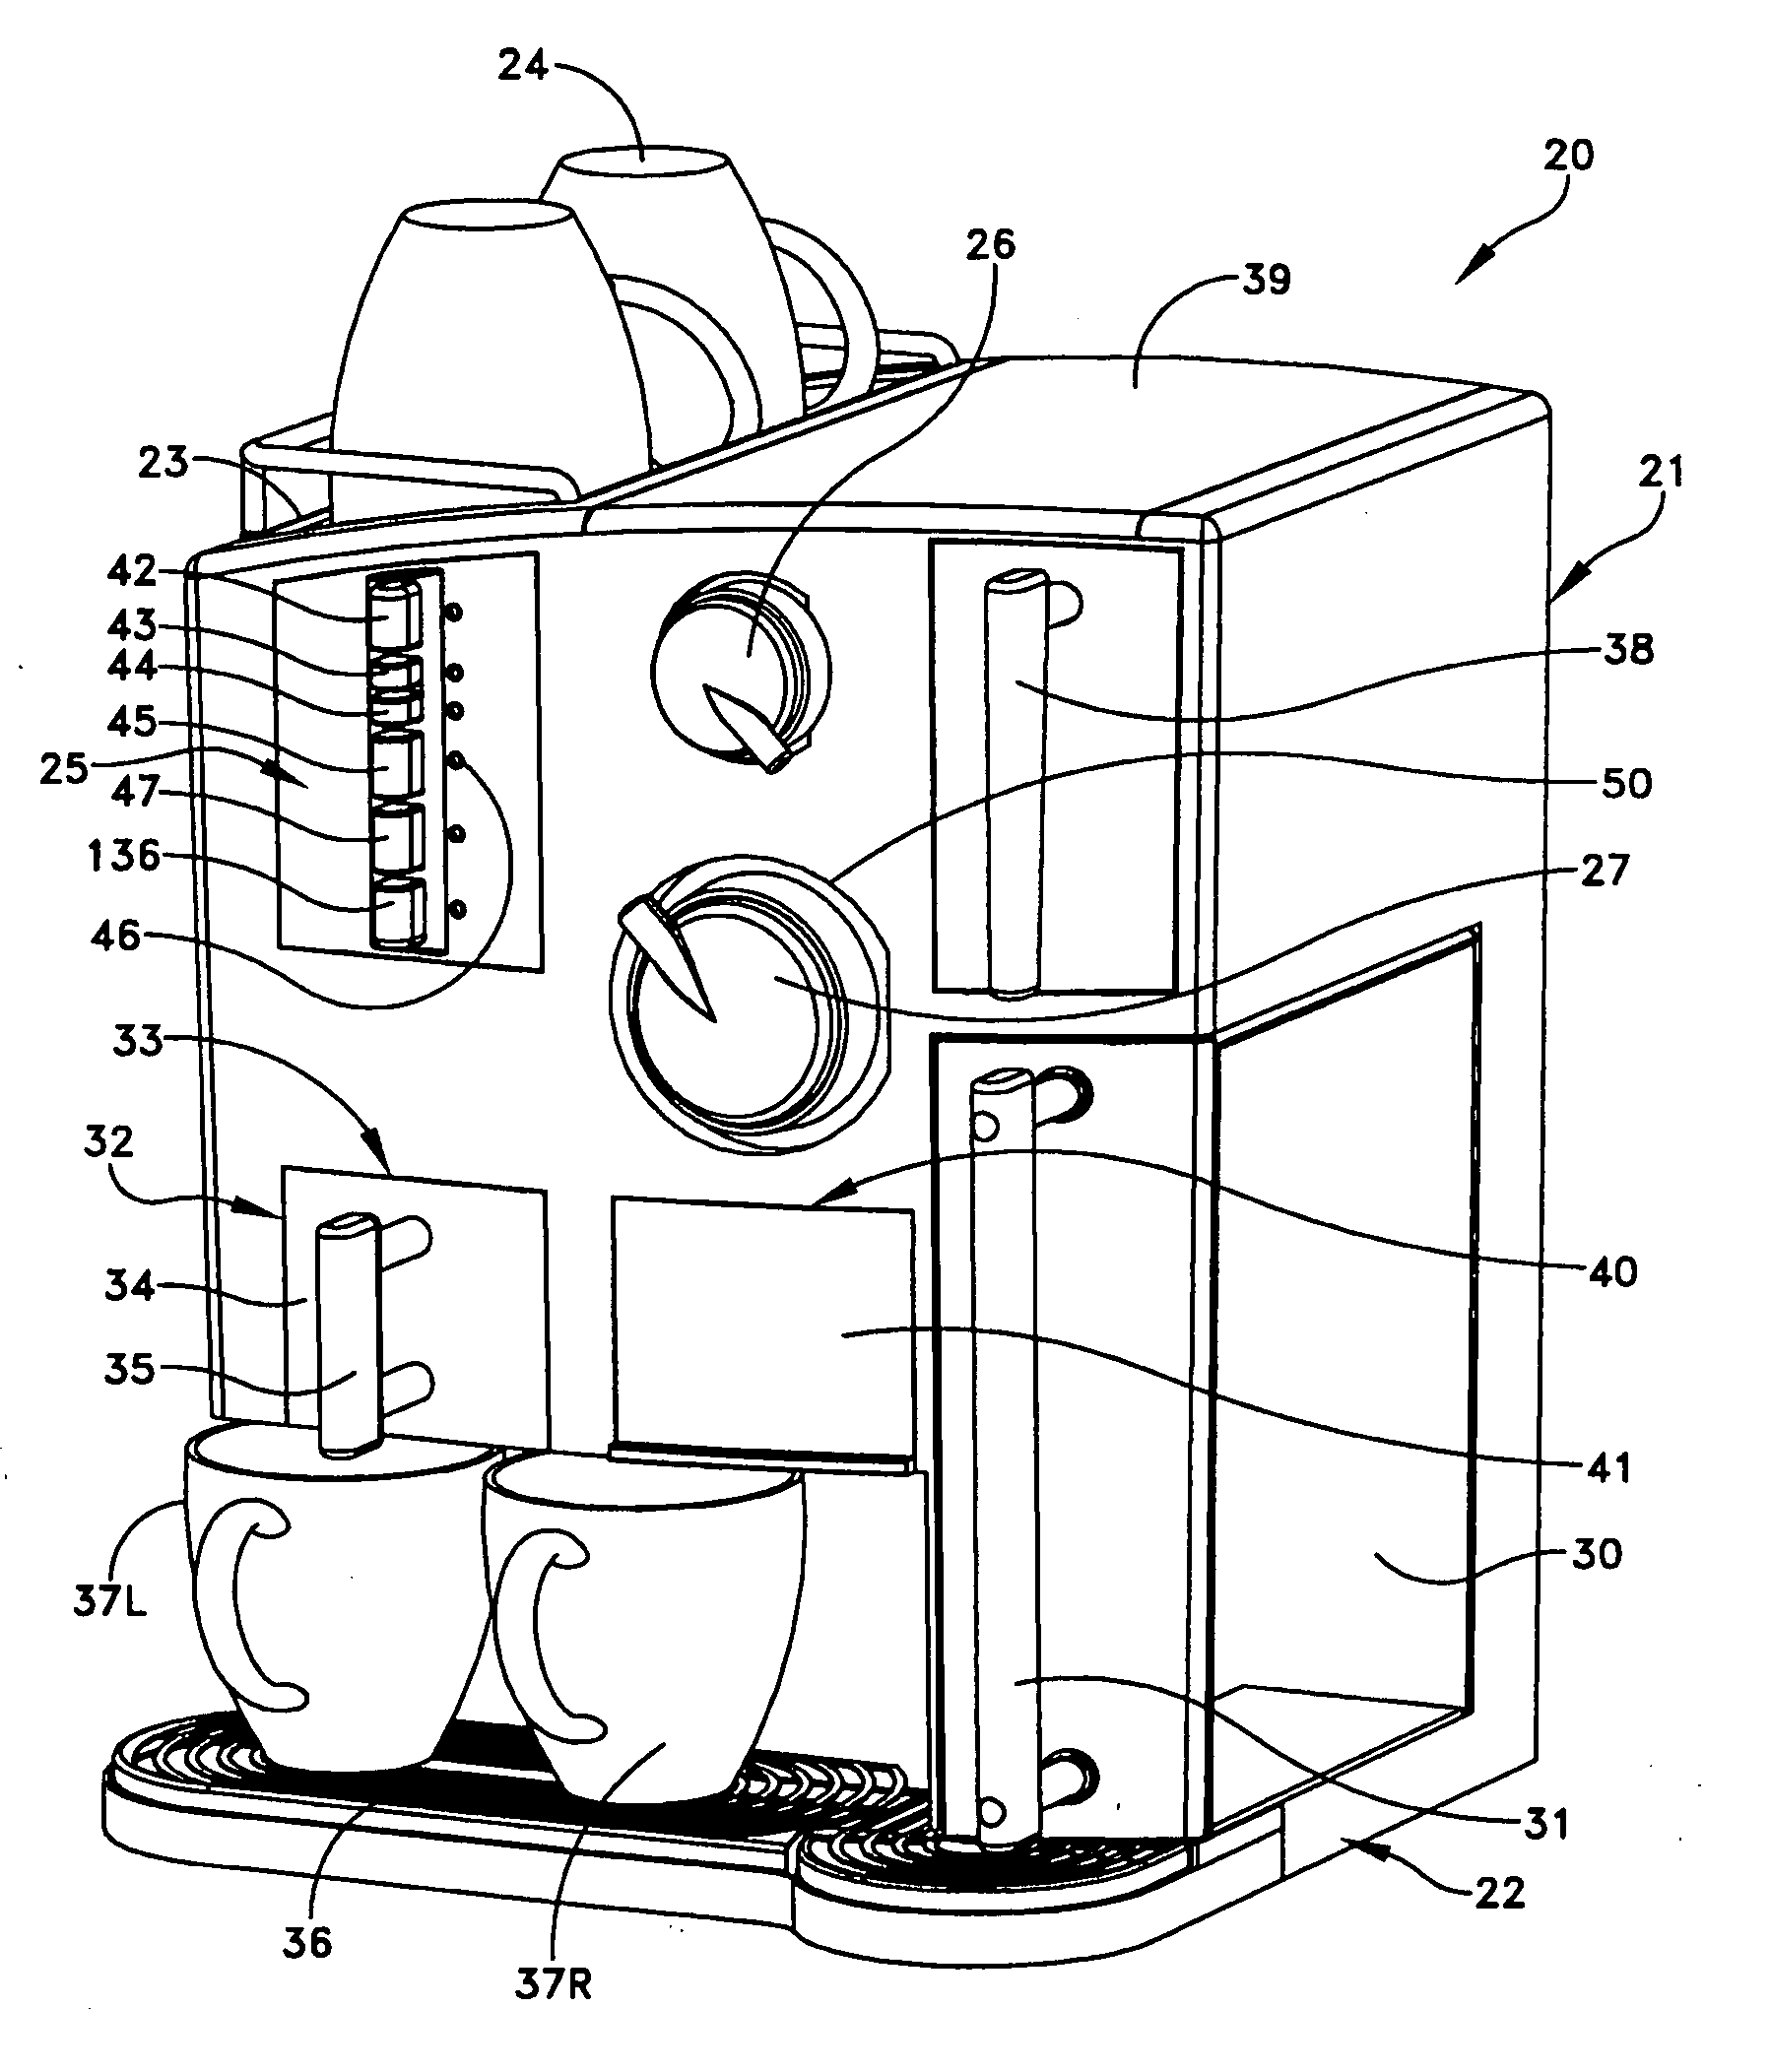 Coffee making apparatus